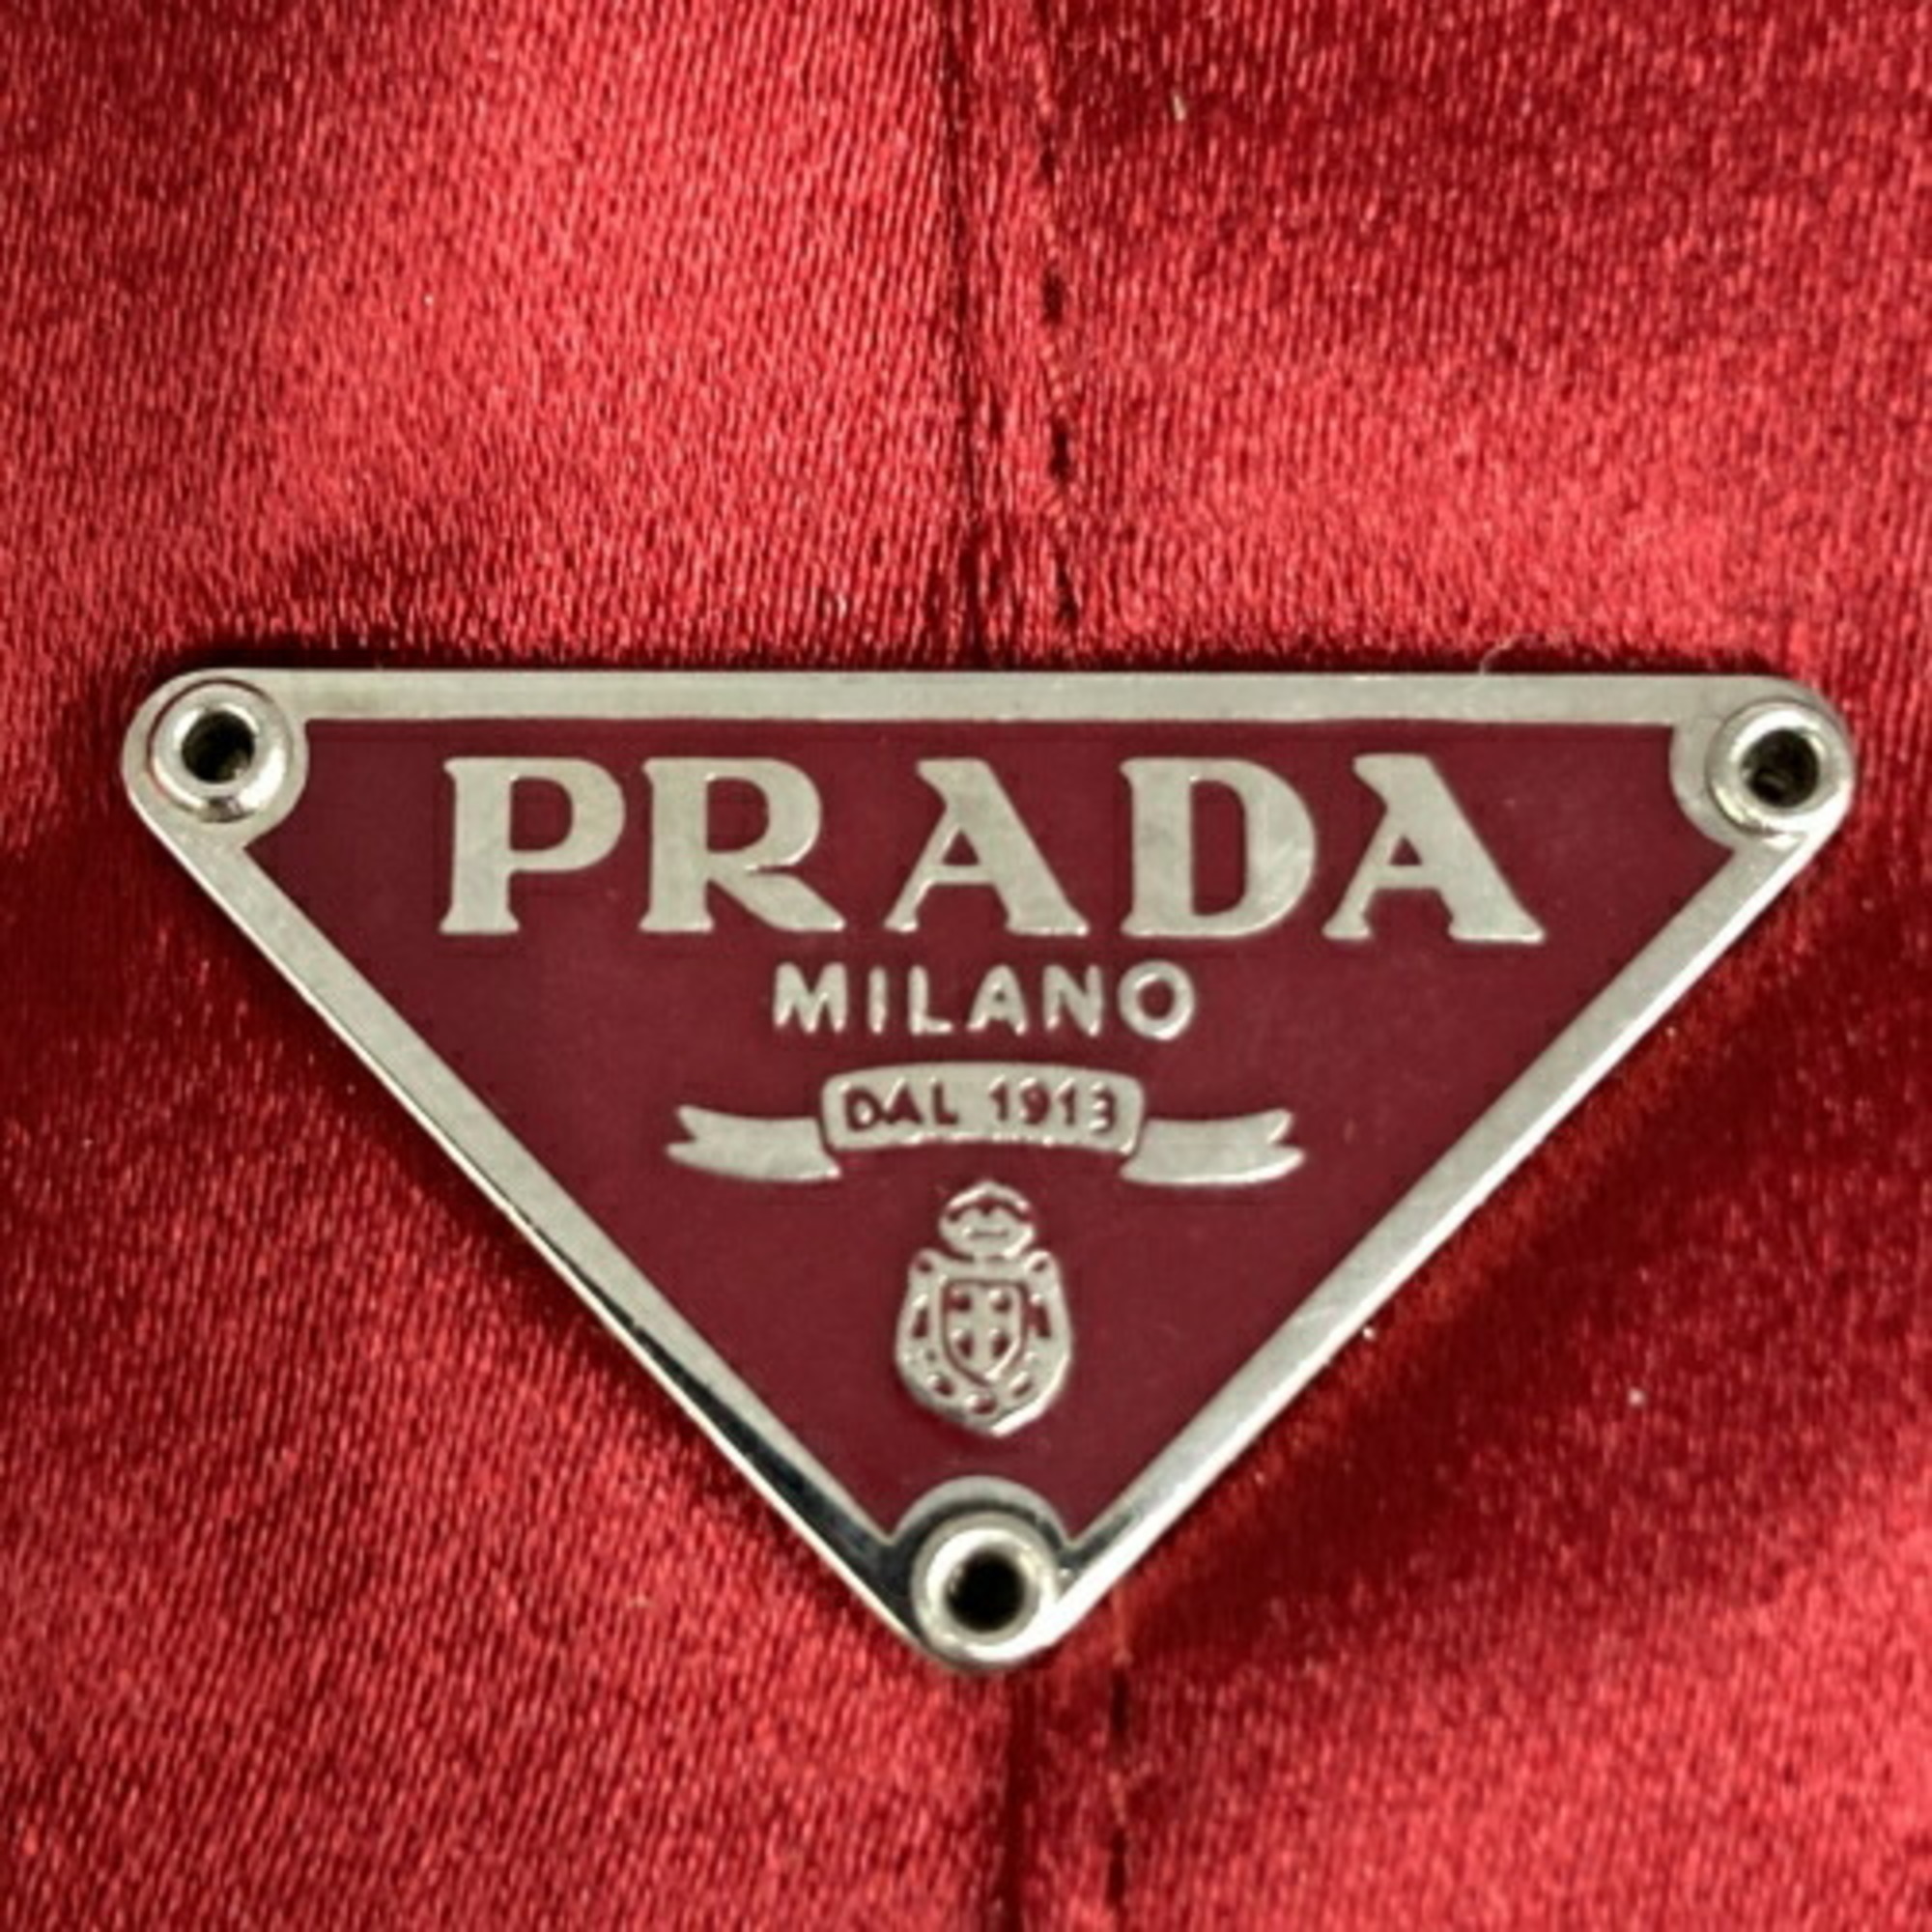 PRADA Prada tote bag handbag triangle red satin ladies fashion ITPYETOYLGSC